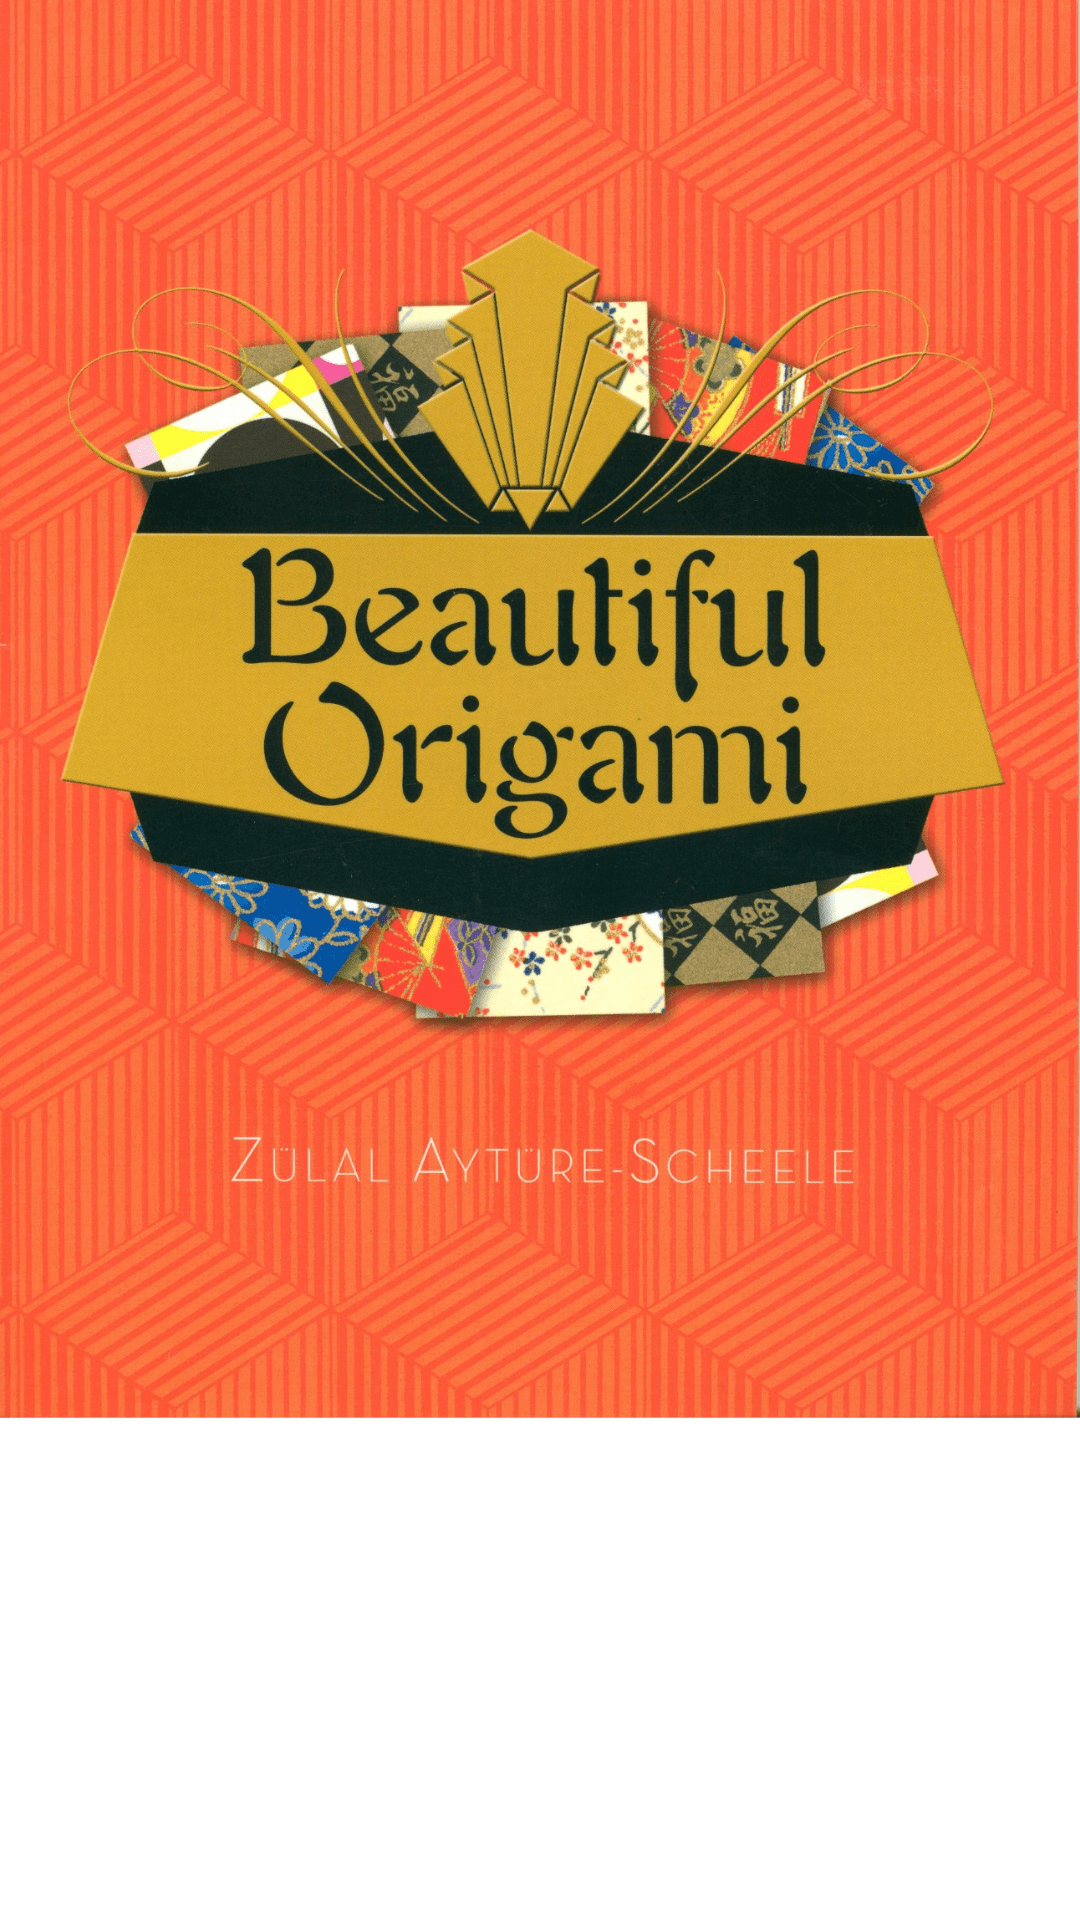 Beautiful Origami by Zulal Ayture Scheele